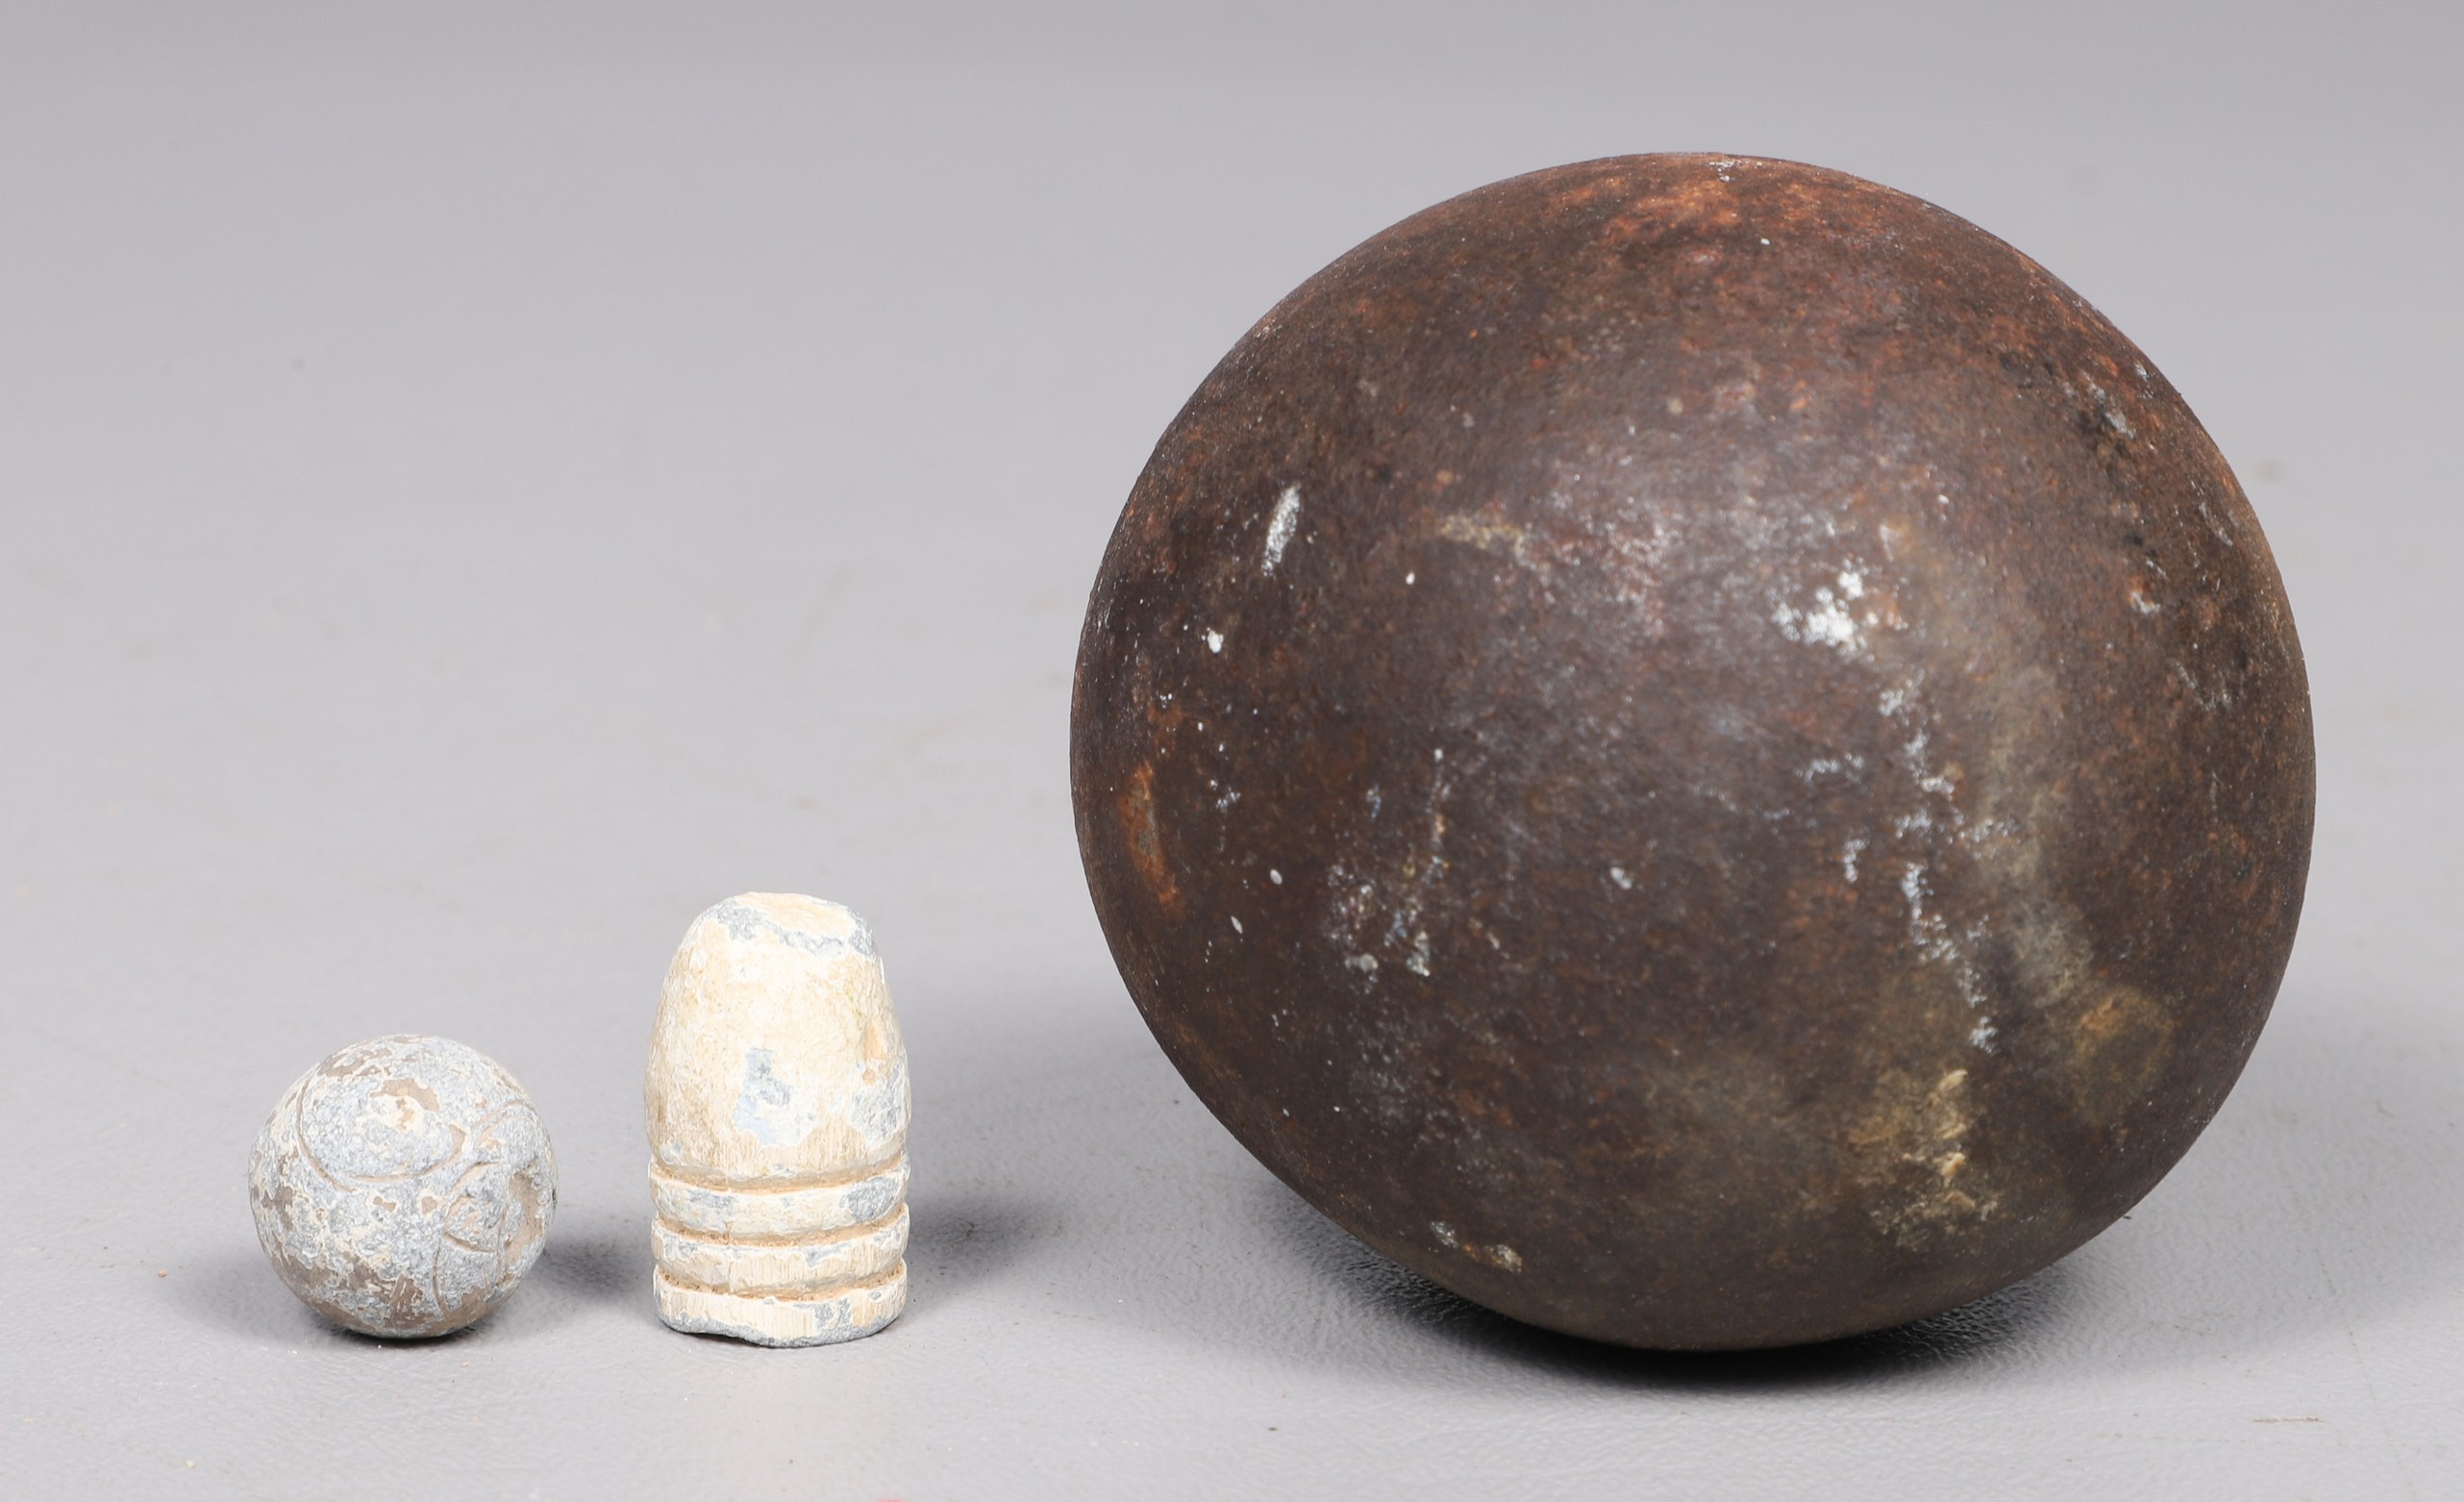  3 Pcs Civil War ammunition found 2e1884